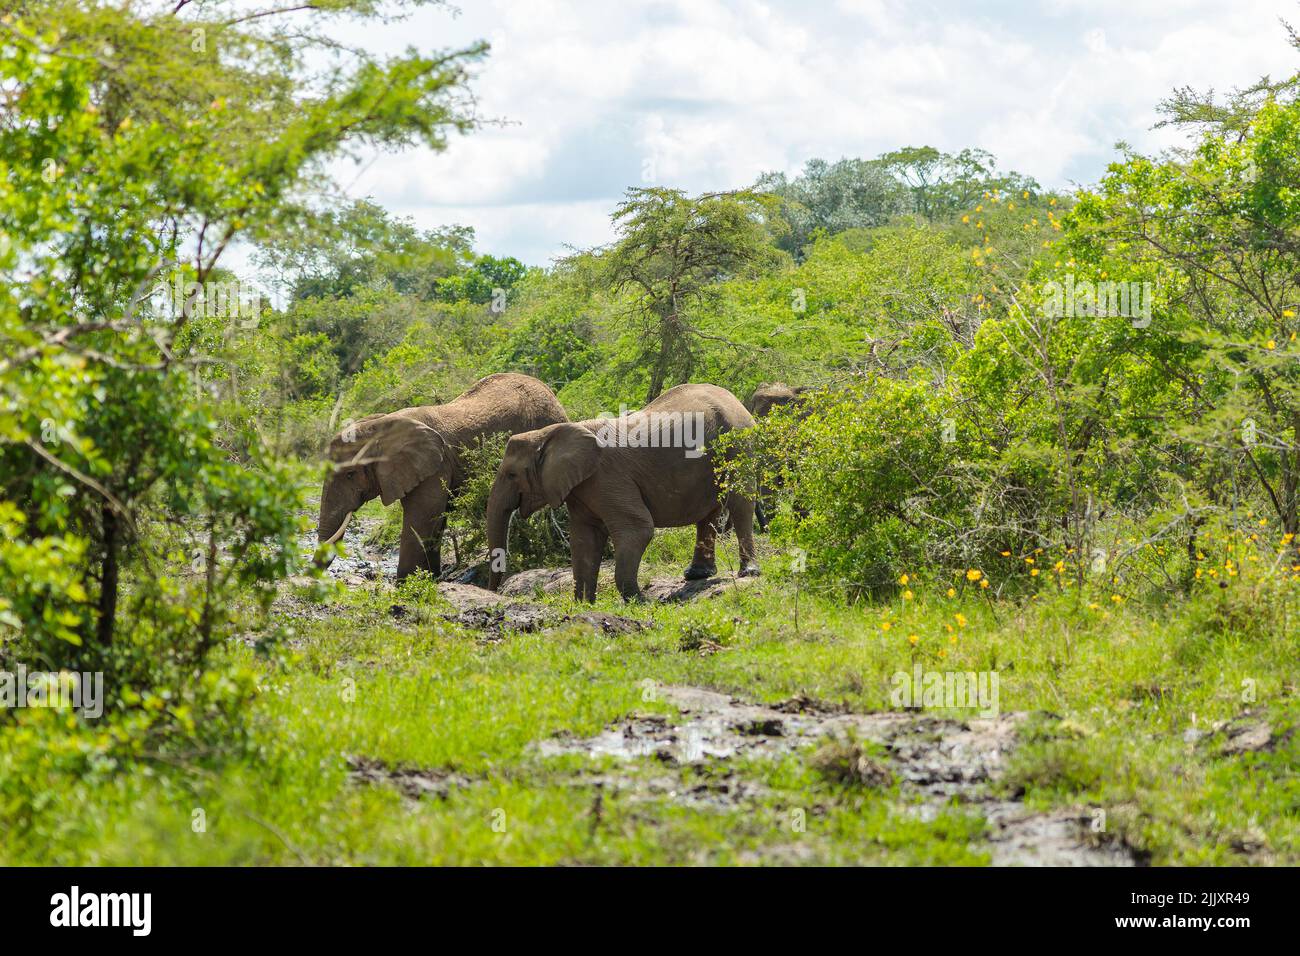 Big elephants walking in park in Africa Stock Photo